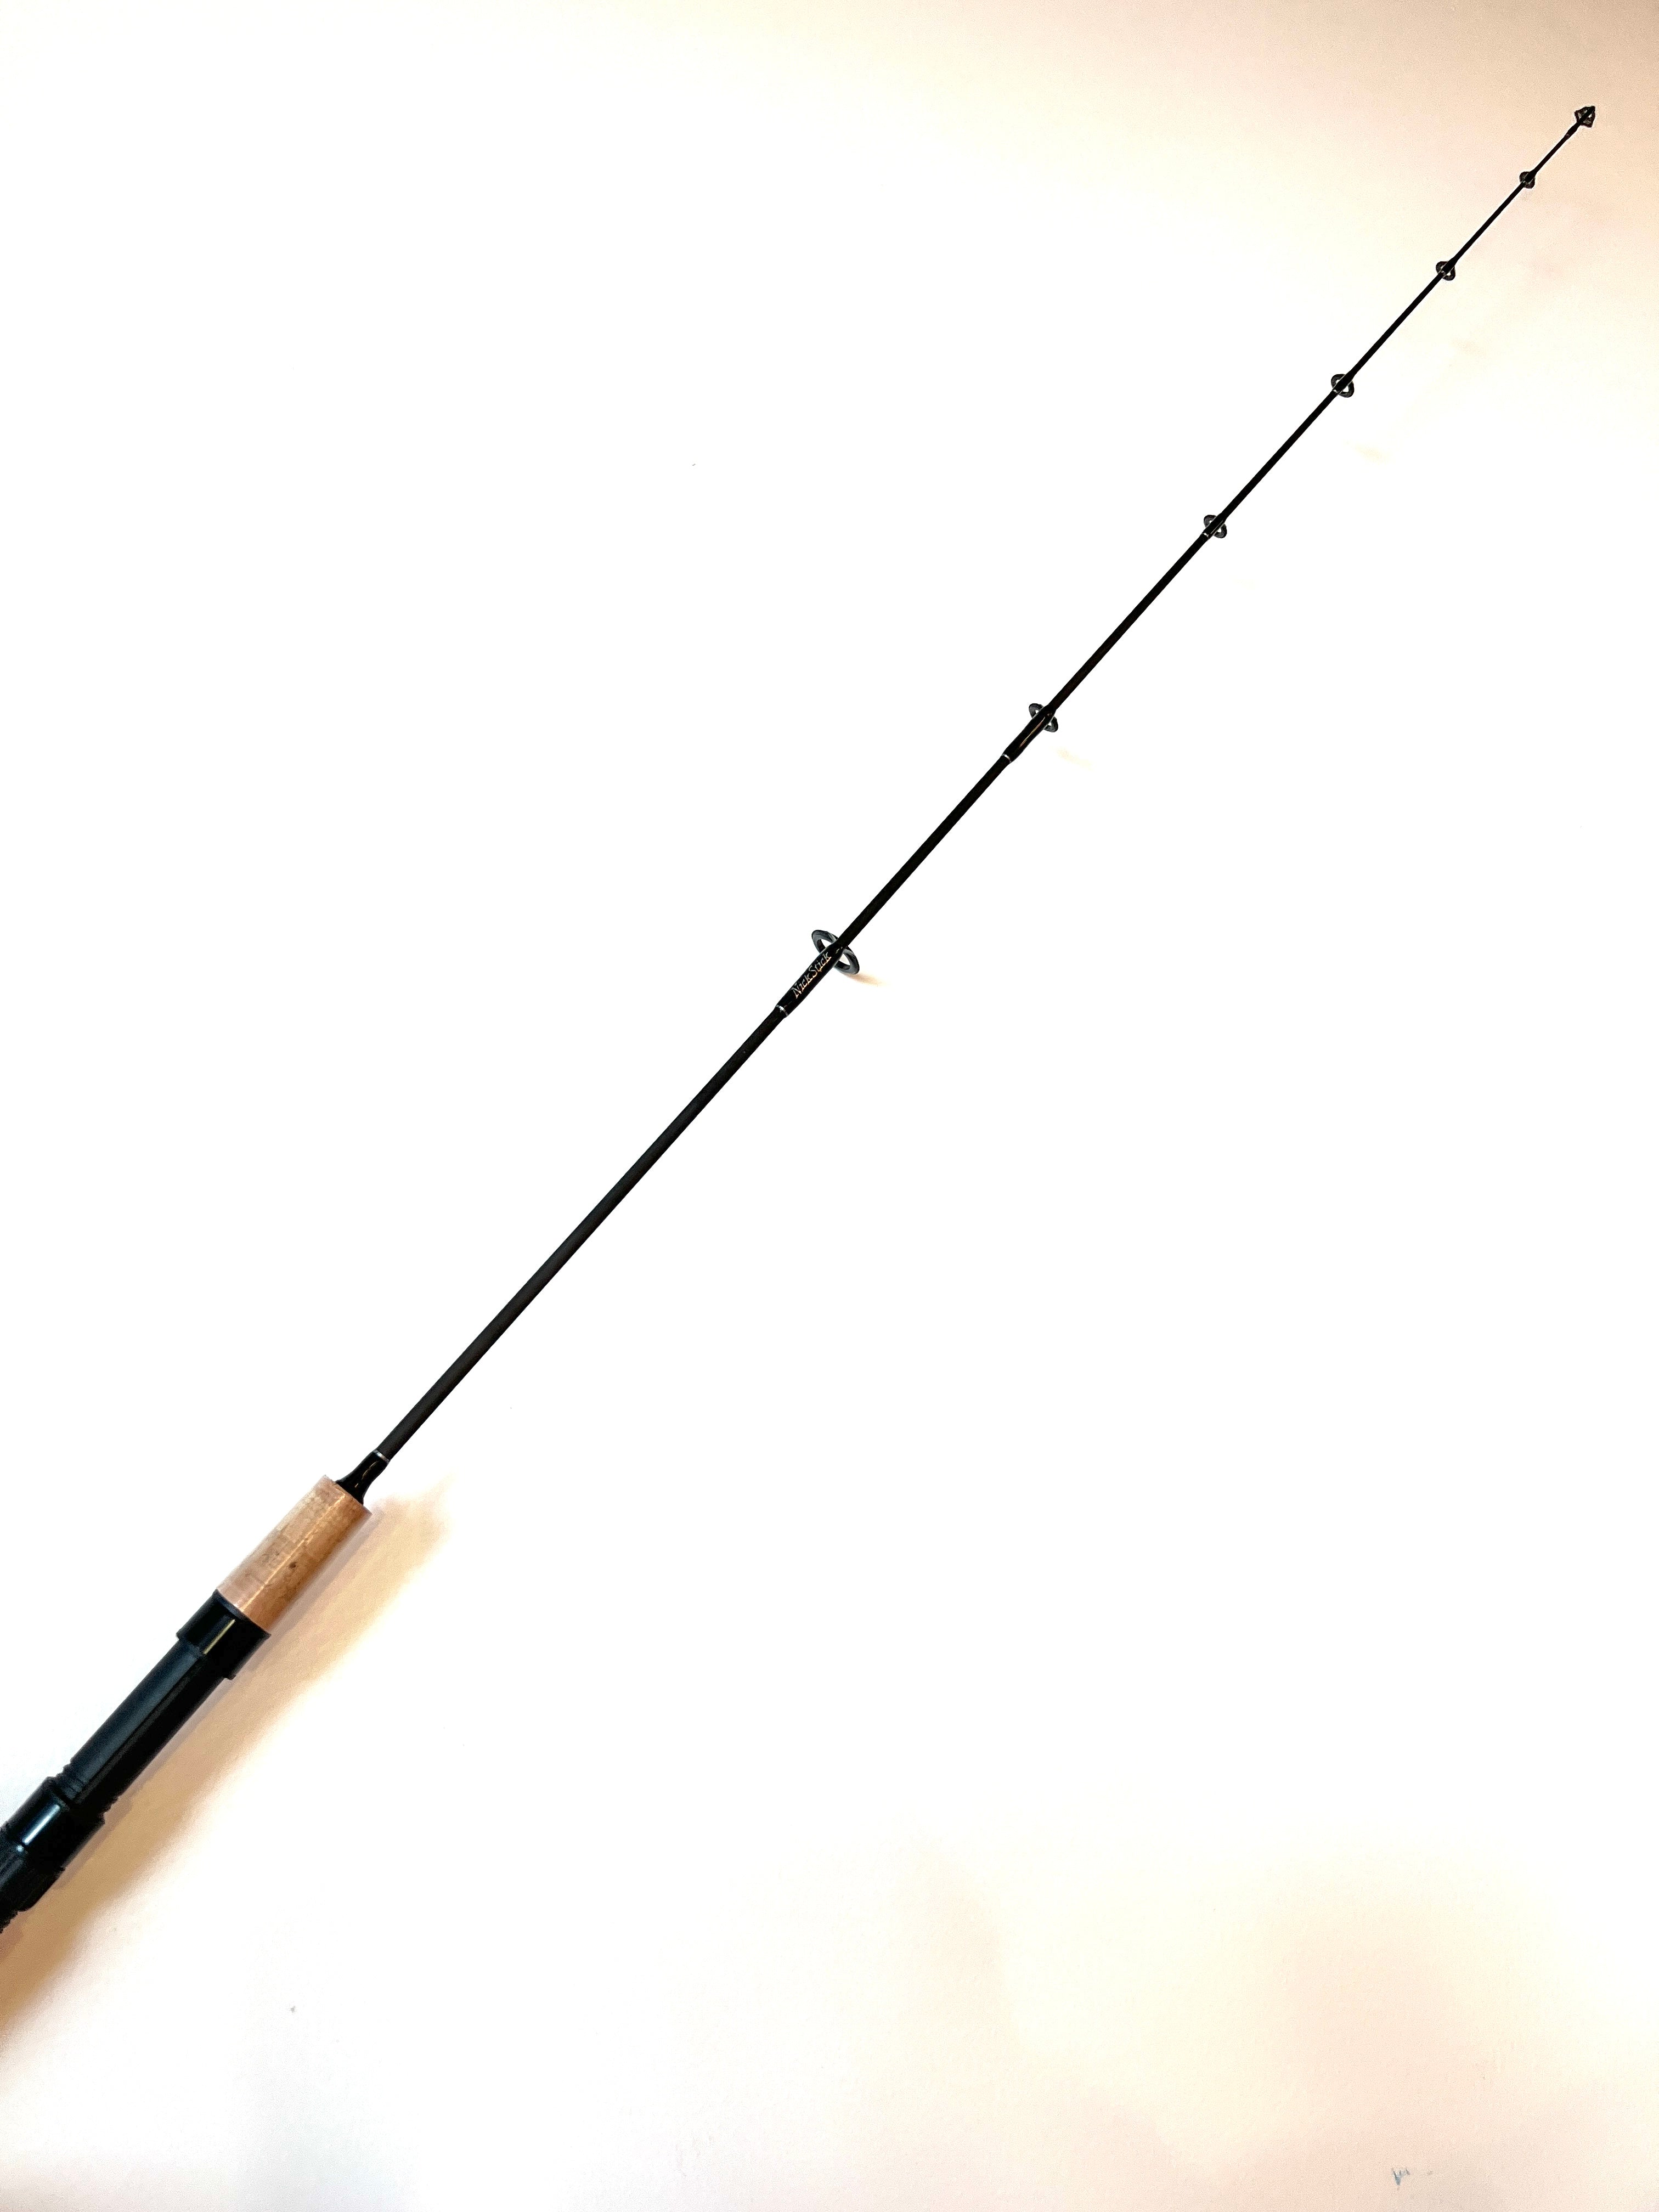 Fast Action 3.9-4.2m Cork Handle Match Fishing Rod - China Fishing Tackle  and Match Fishing Rod price